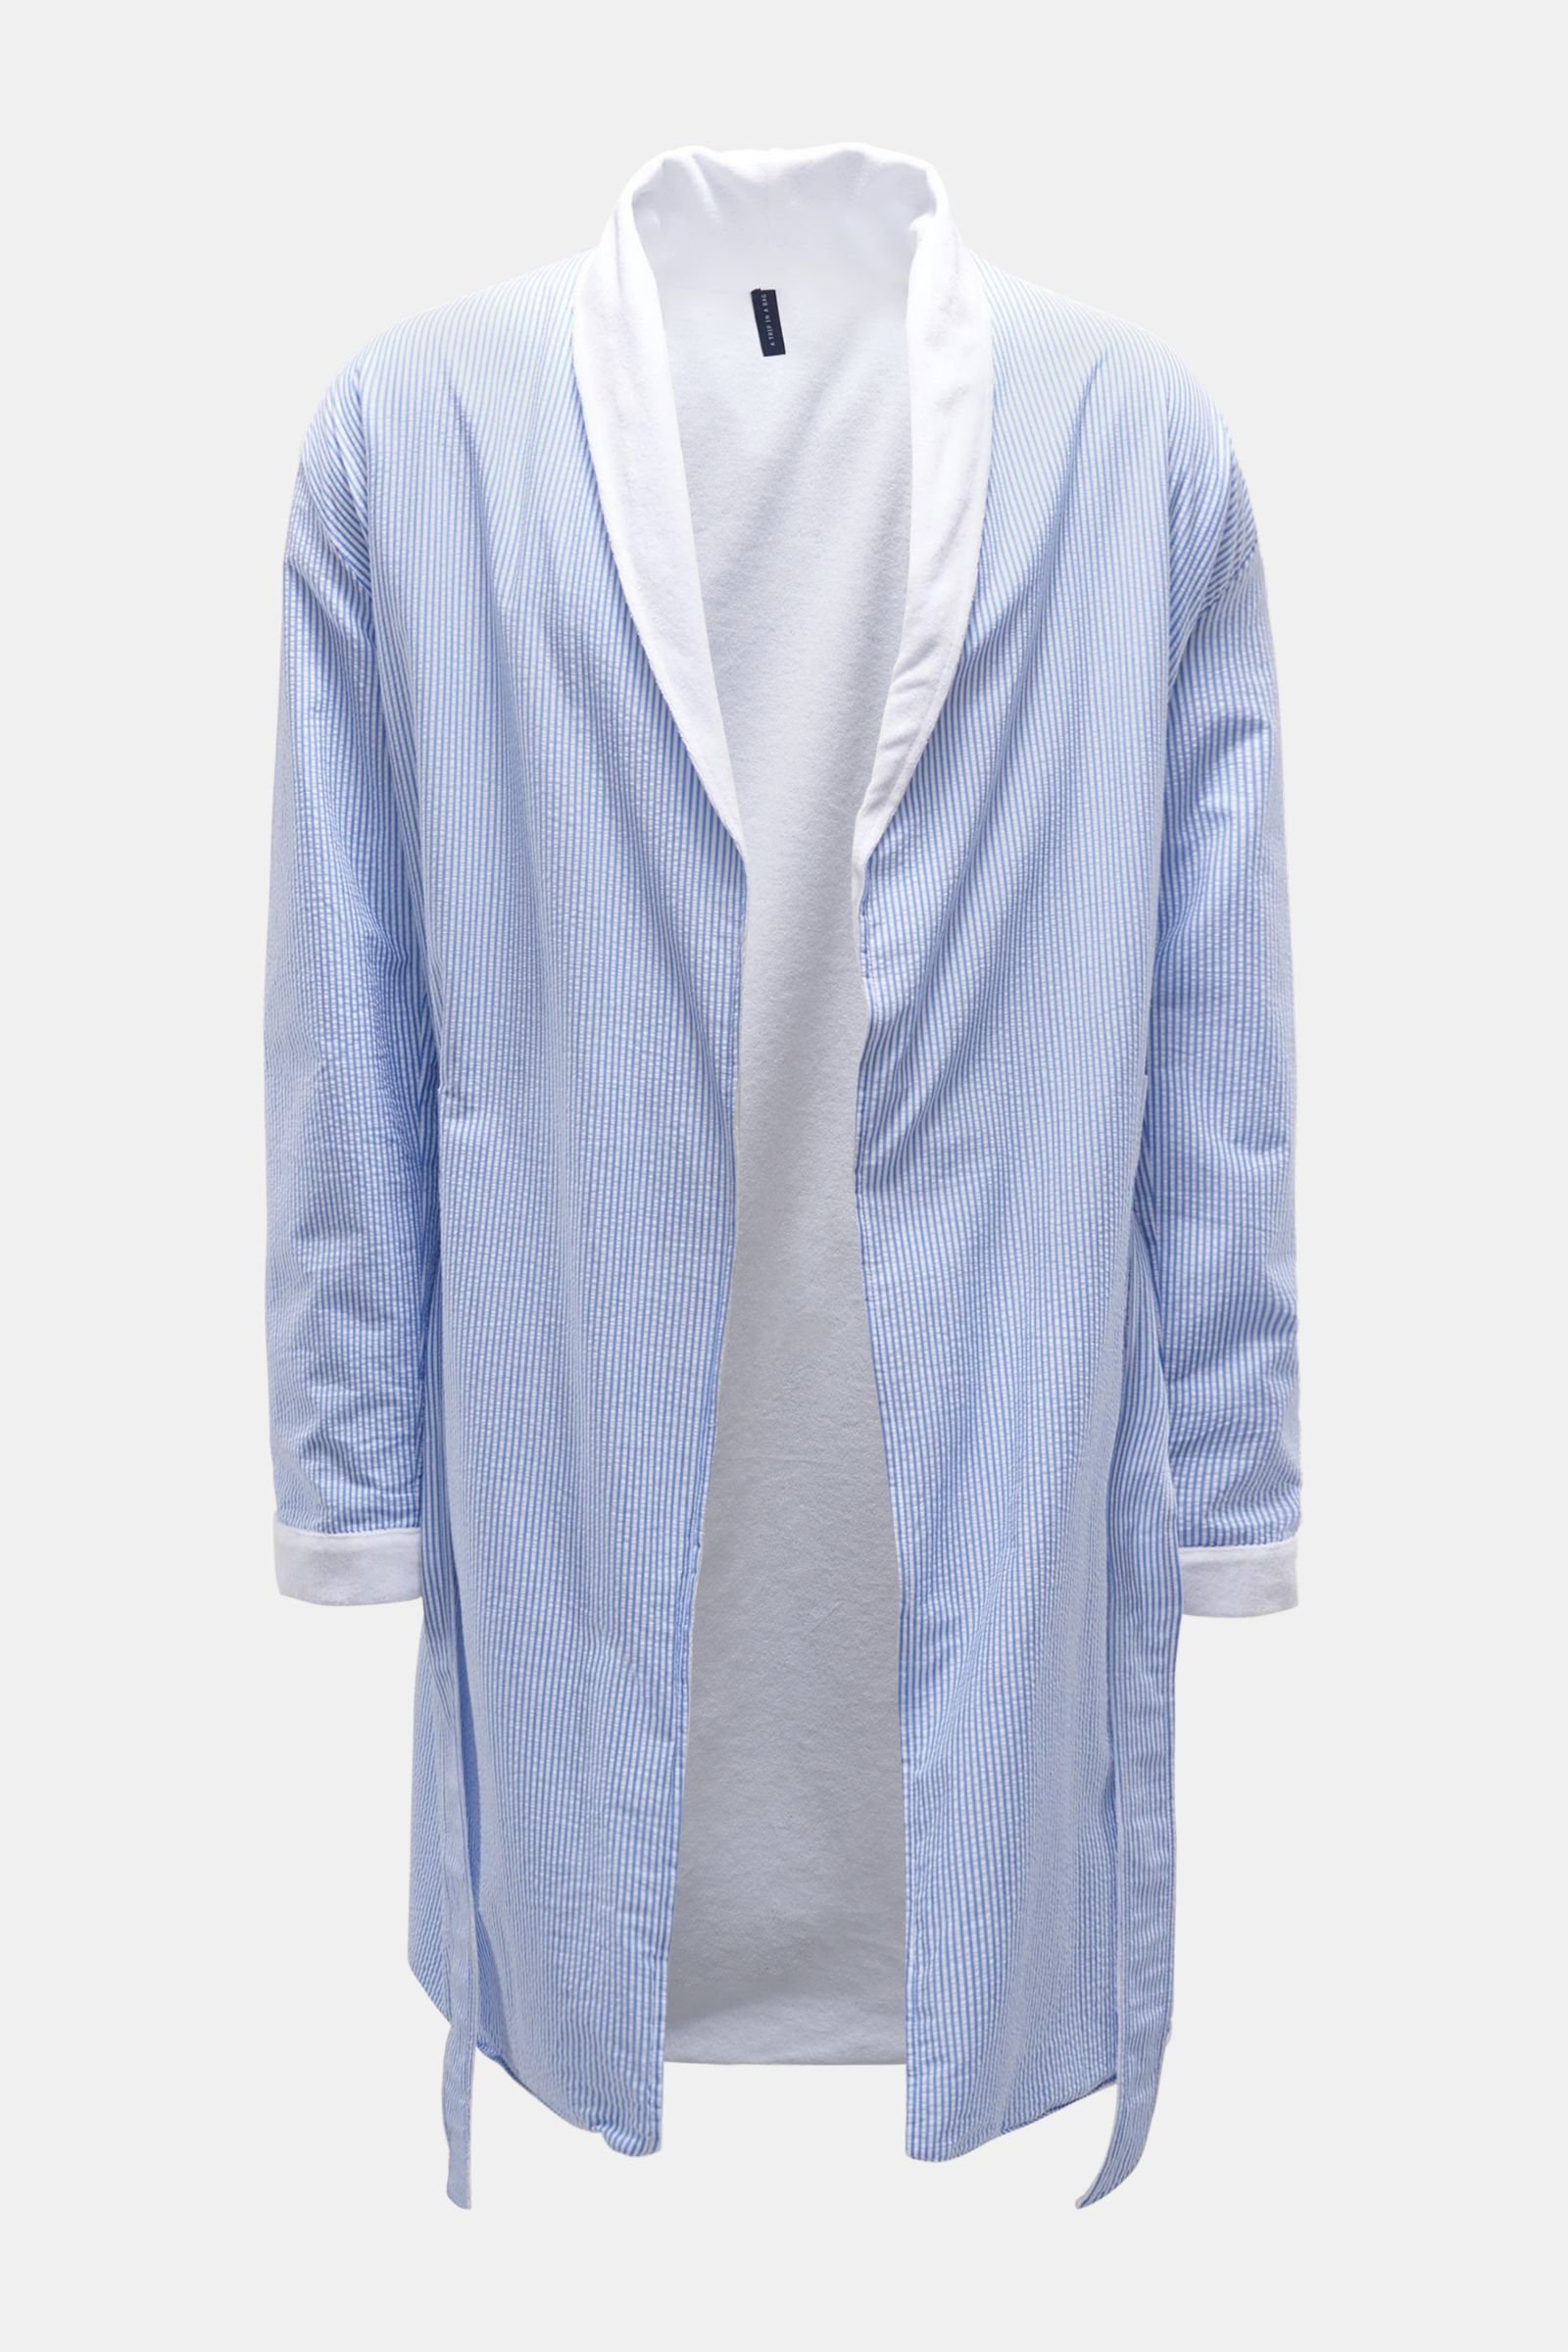 Seersucker bathrobe 'Beach Coat' grey-blue/white striped